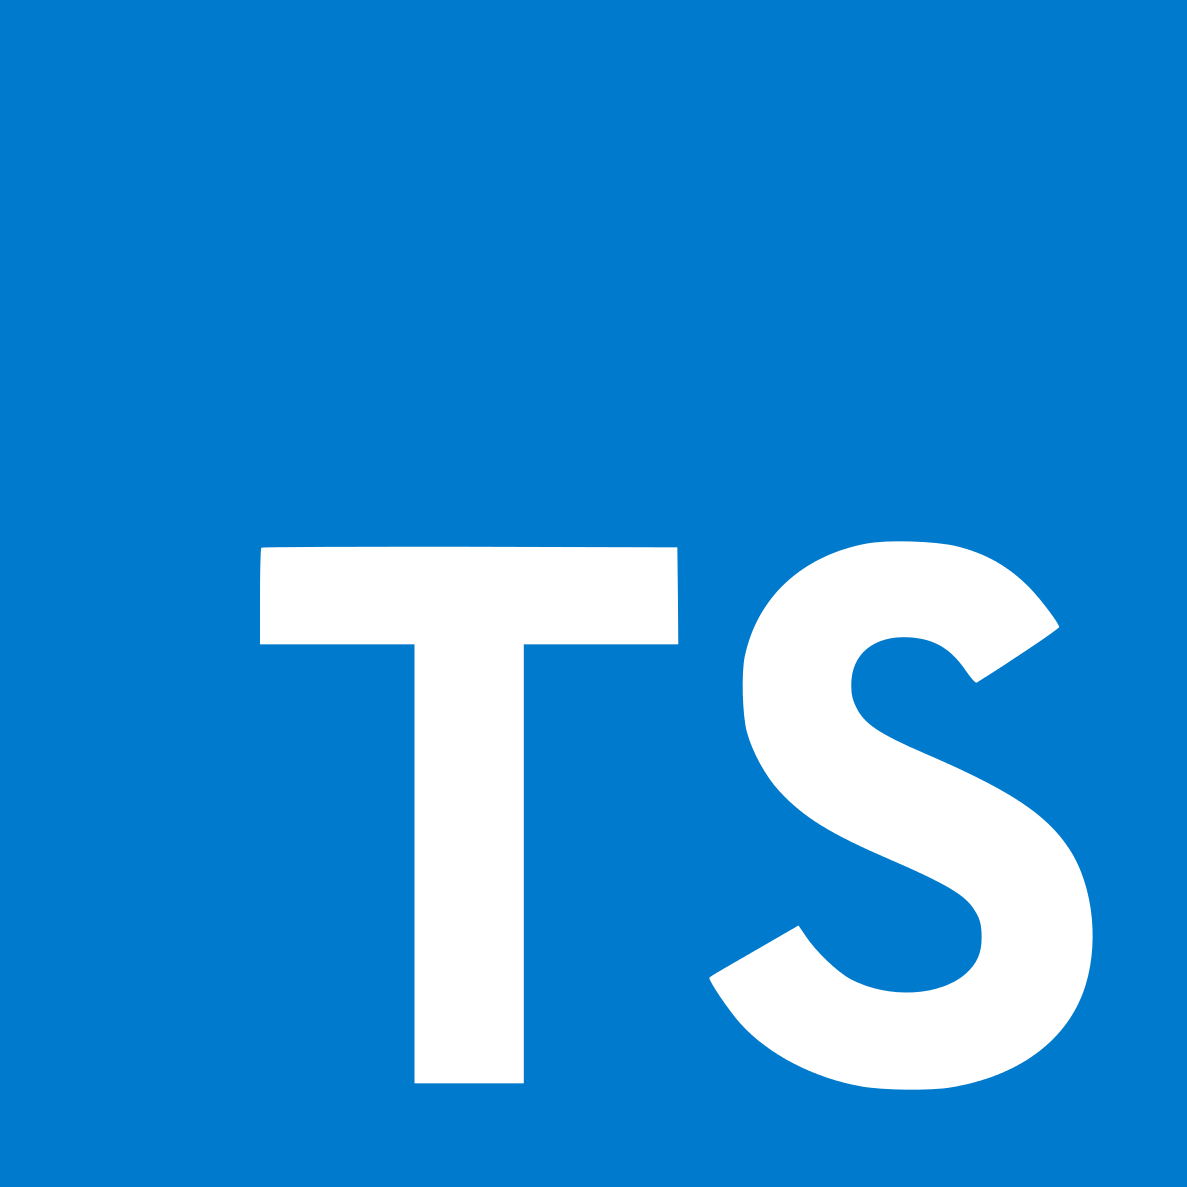 TypeScript Logo - TypeScript / official or unofficial logo · Issue #78 · exercism/meta ...